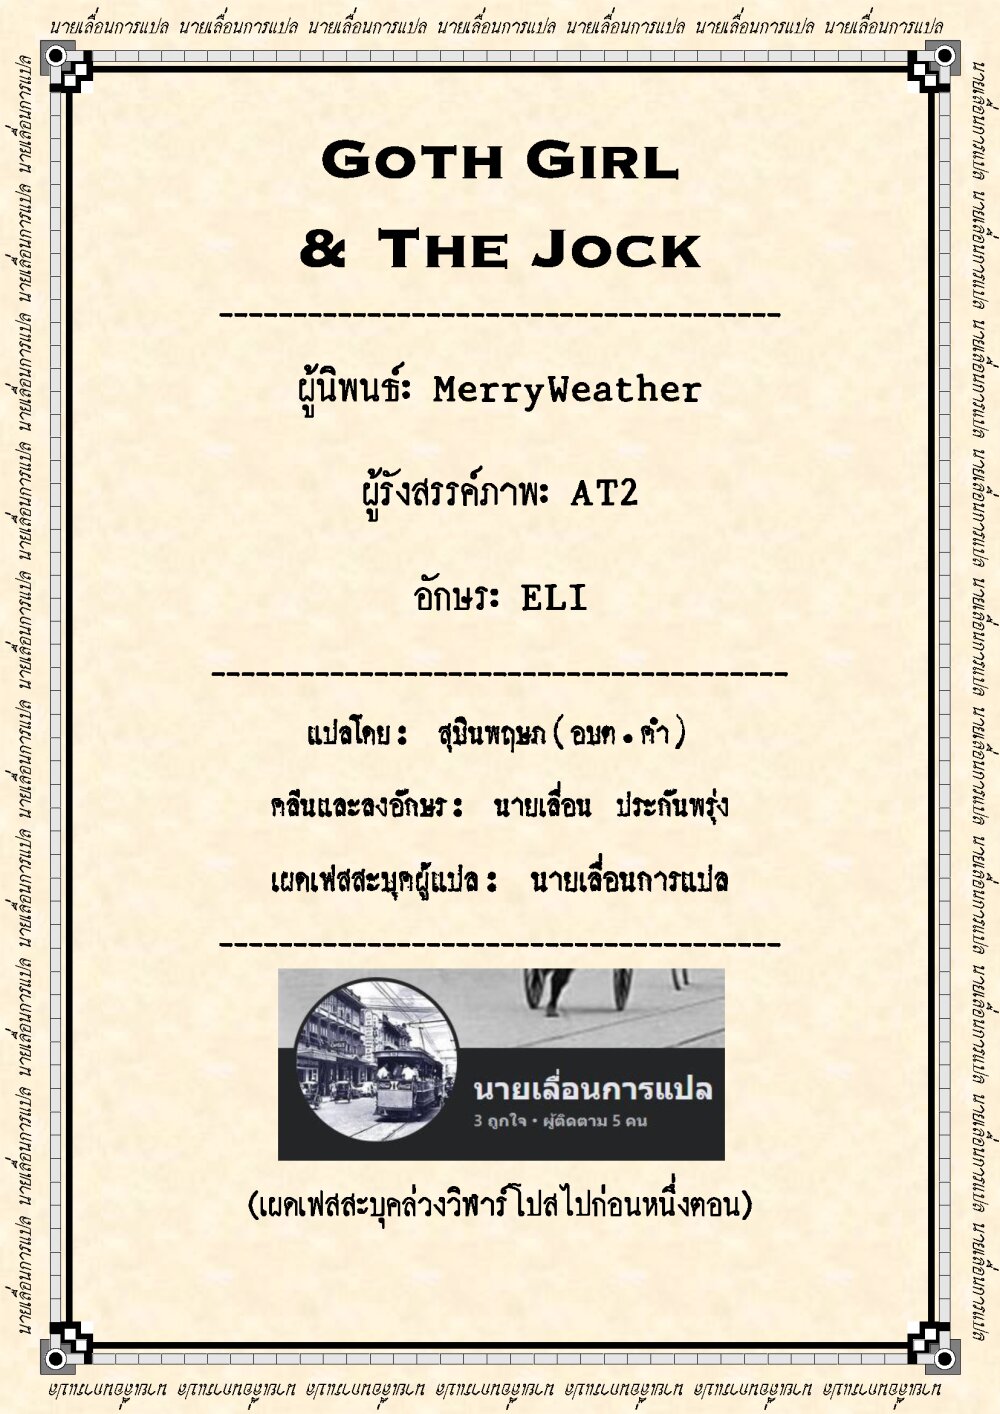 Goth Girl & The Jock 13 9